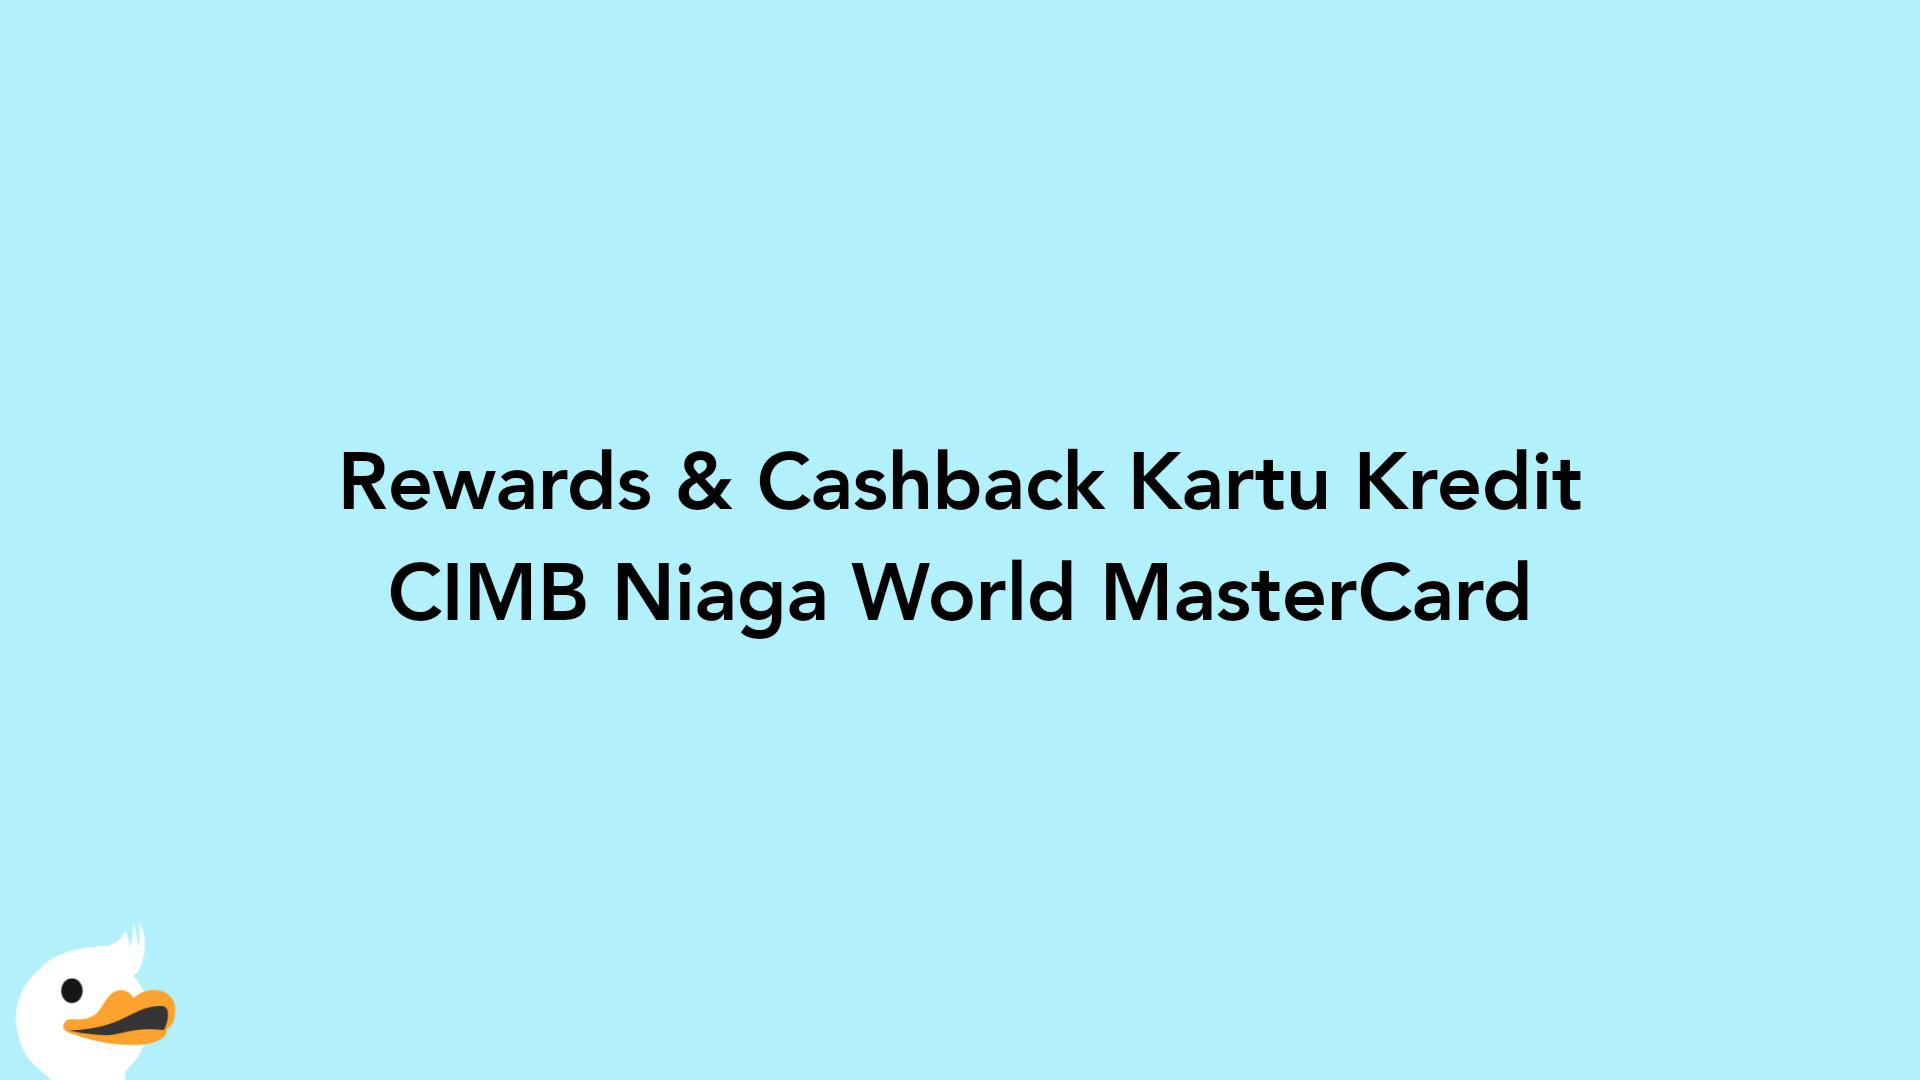 Rewards & Cashback Kartu Kredit CIMB Niaga World MasterCard